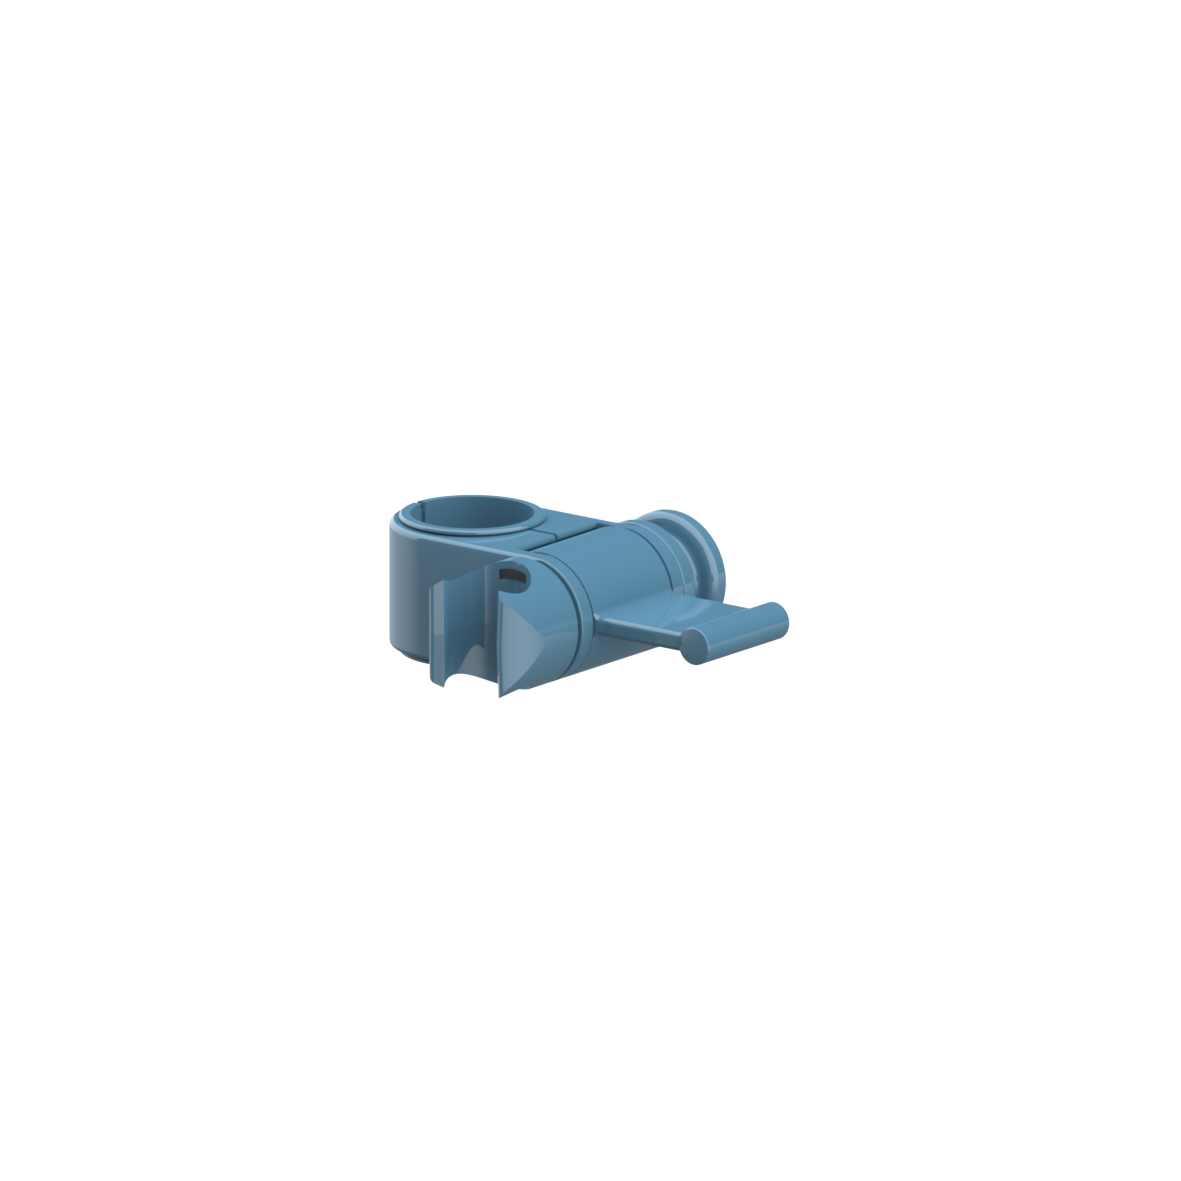 Inox Care Shower head holder, 88 x 34 x 113 mm, Pastel blue